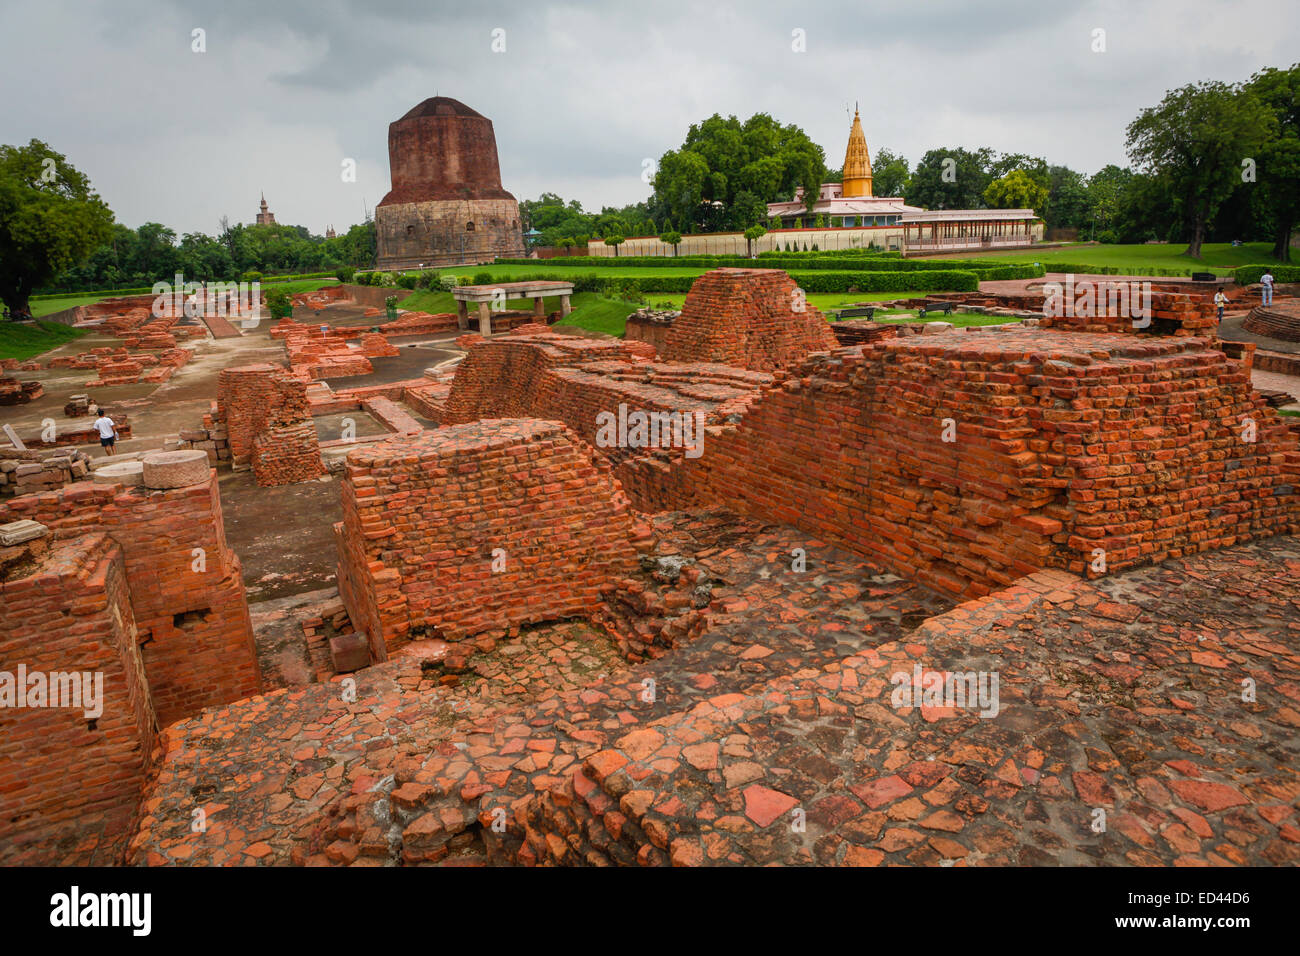 Ruins of brick structures at Dhamek stupa complex in Sarnath, on the outskirts of Varanasi, Uttar Pradesh, India. Stock Photo